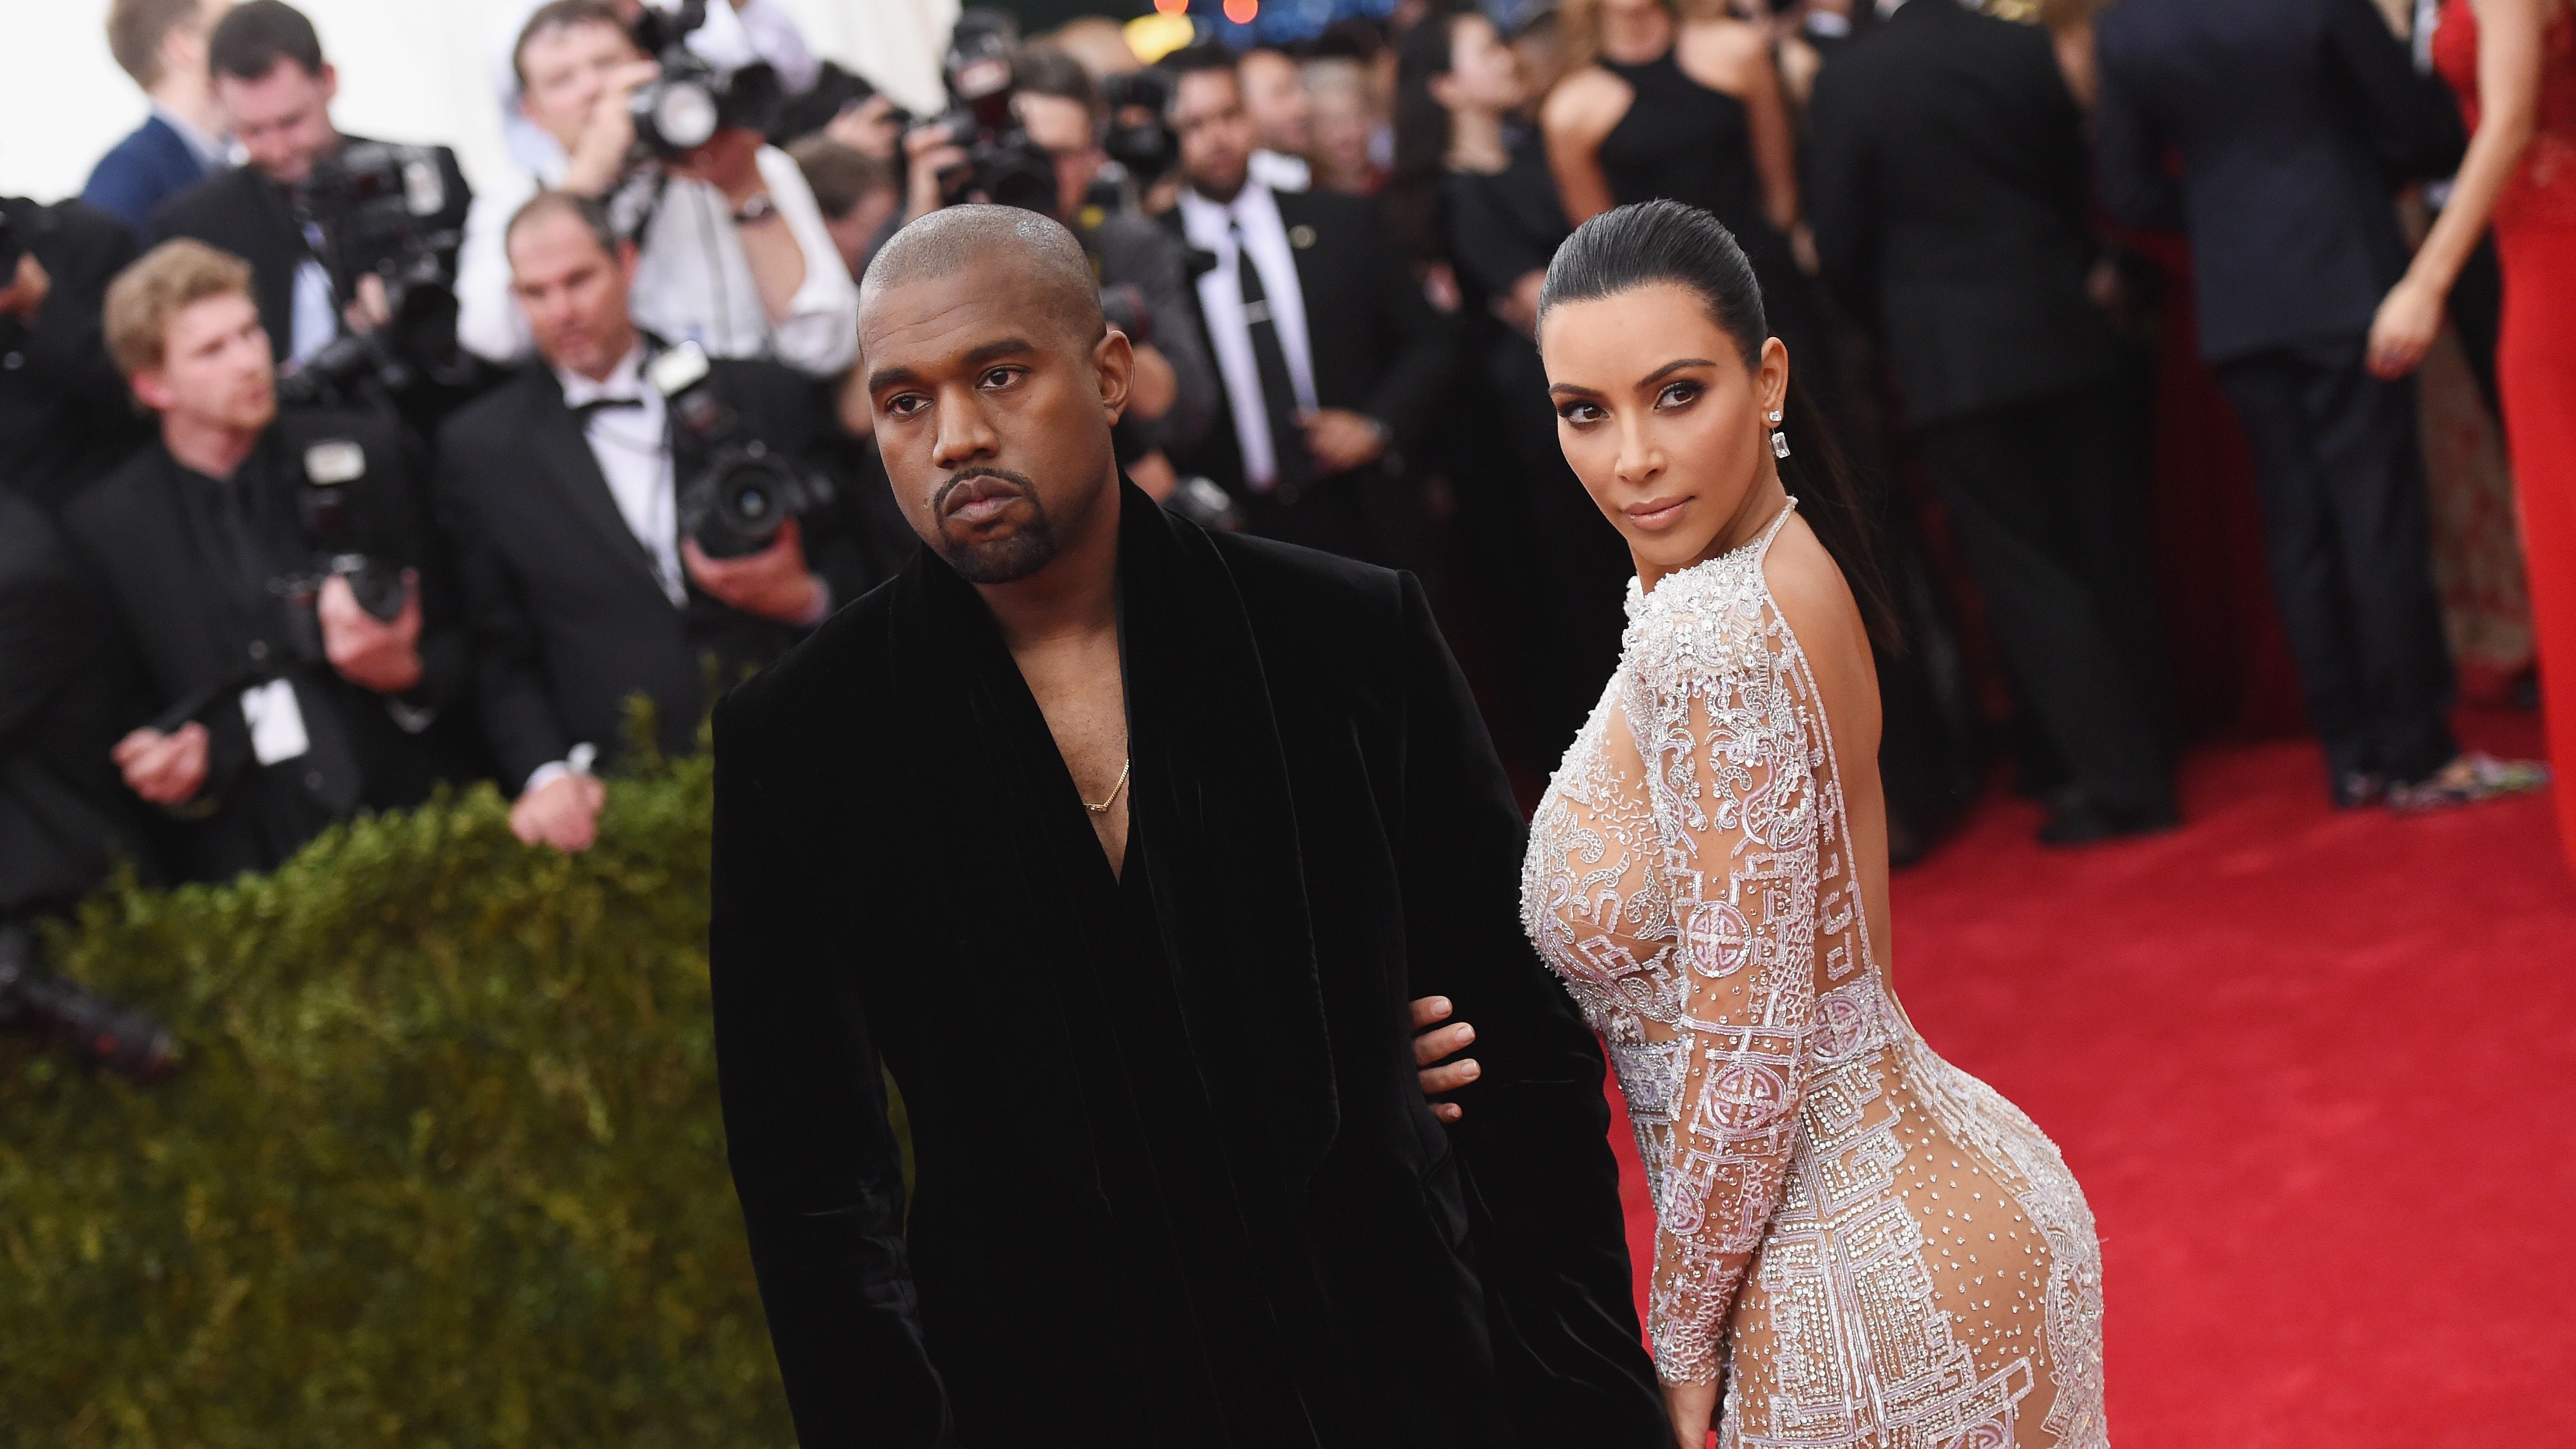 Kim Kardashian sings to one of her ex-husband Kanye West's hit songs